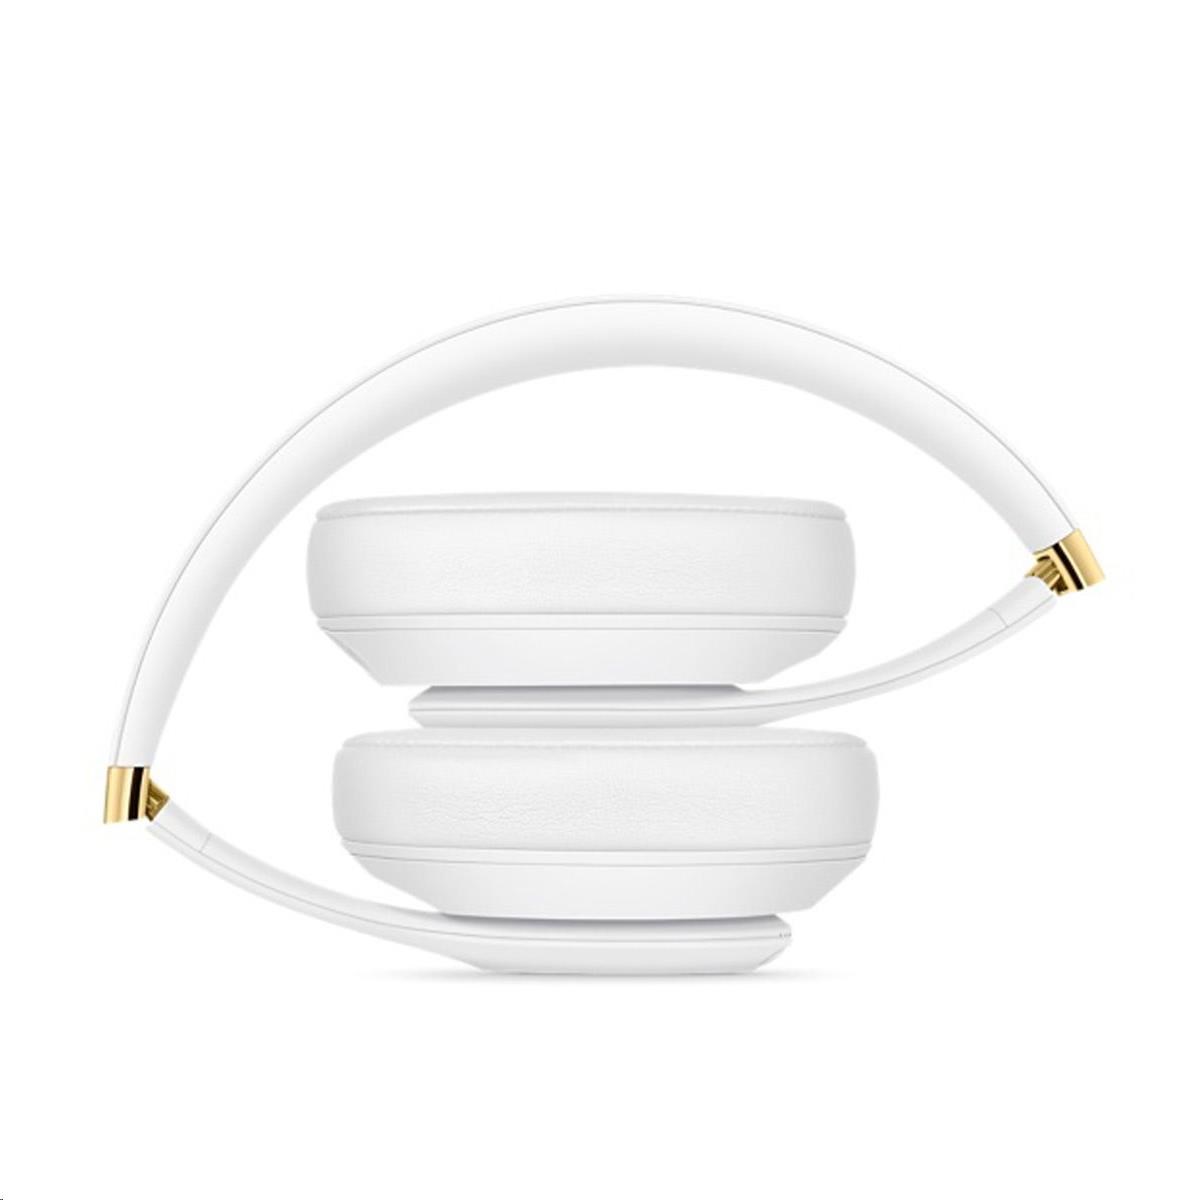 Beats Studio3 Wireless Over-Ear Headphones - White2 